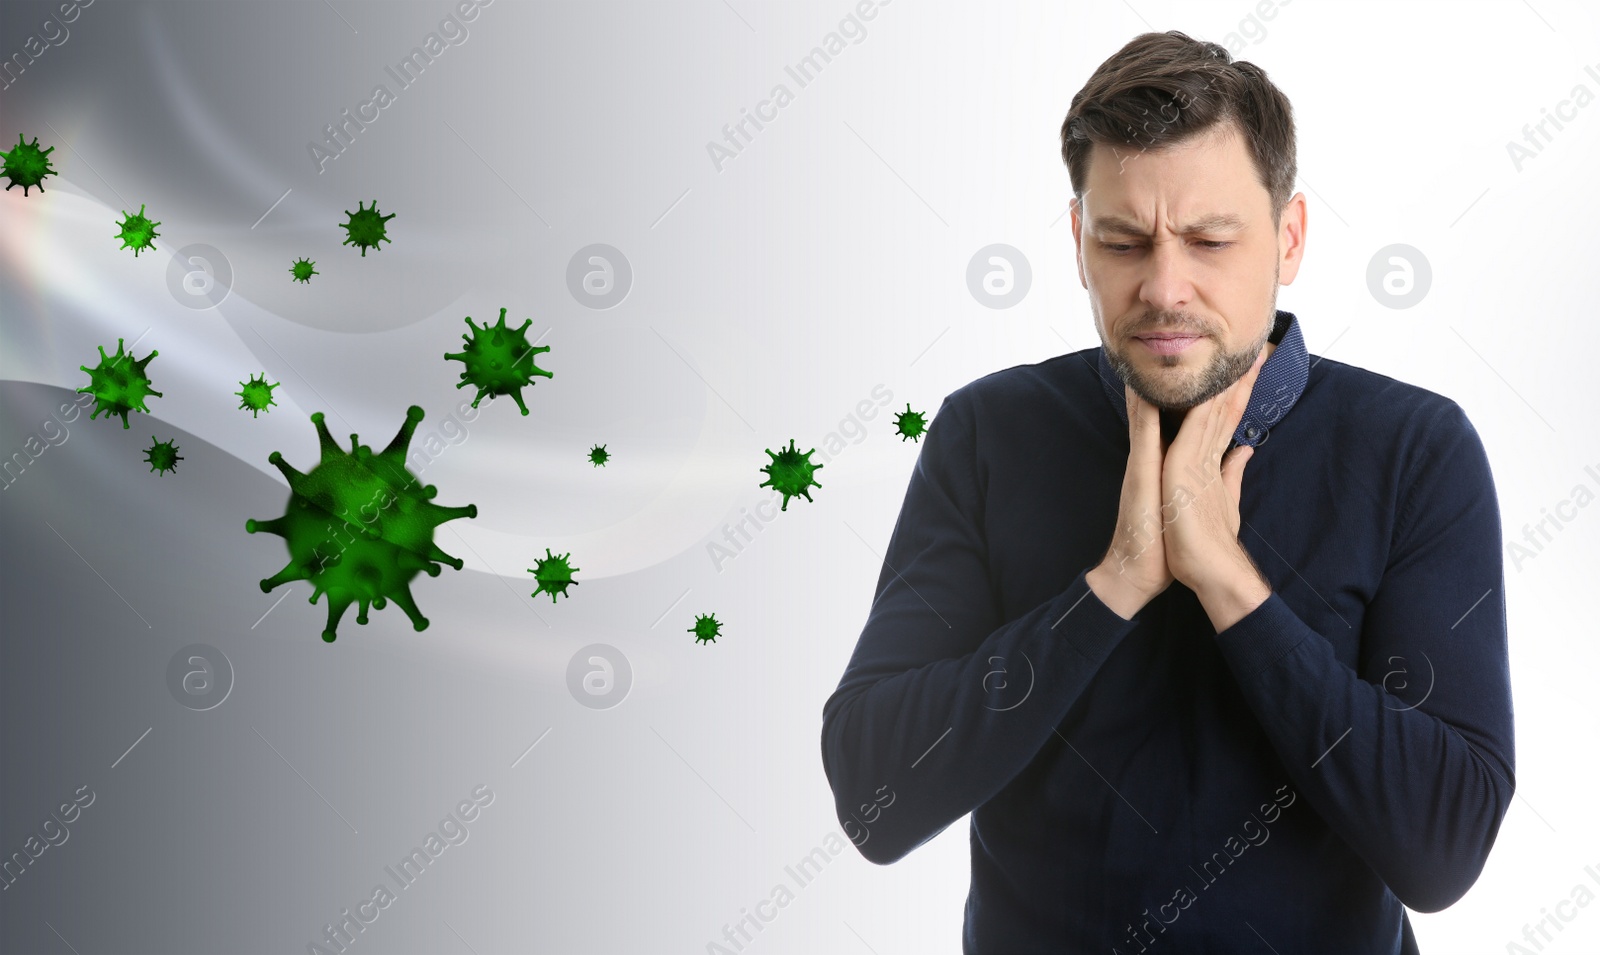 Image of Viruses affecting mature man on light background